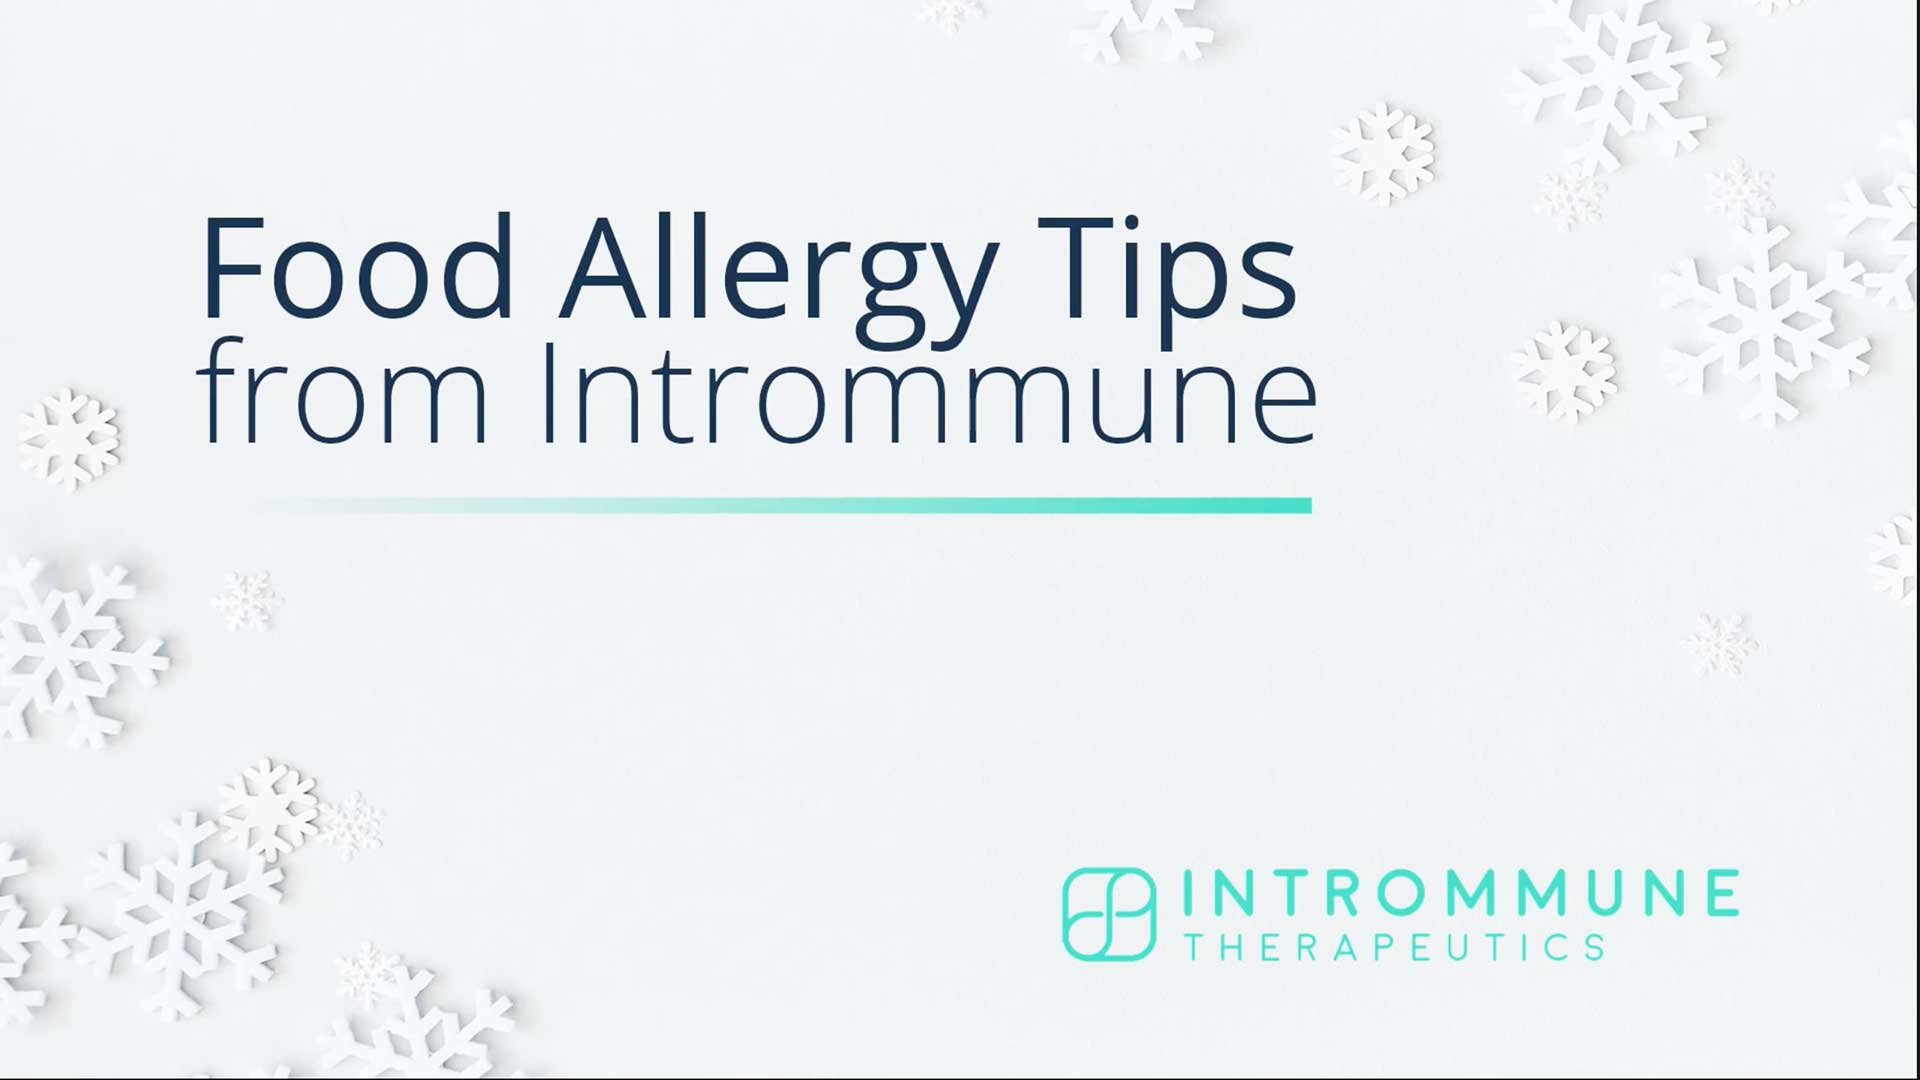 Intrommune - Food Allergy Tips